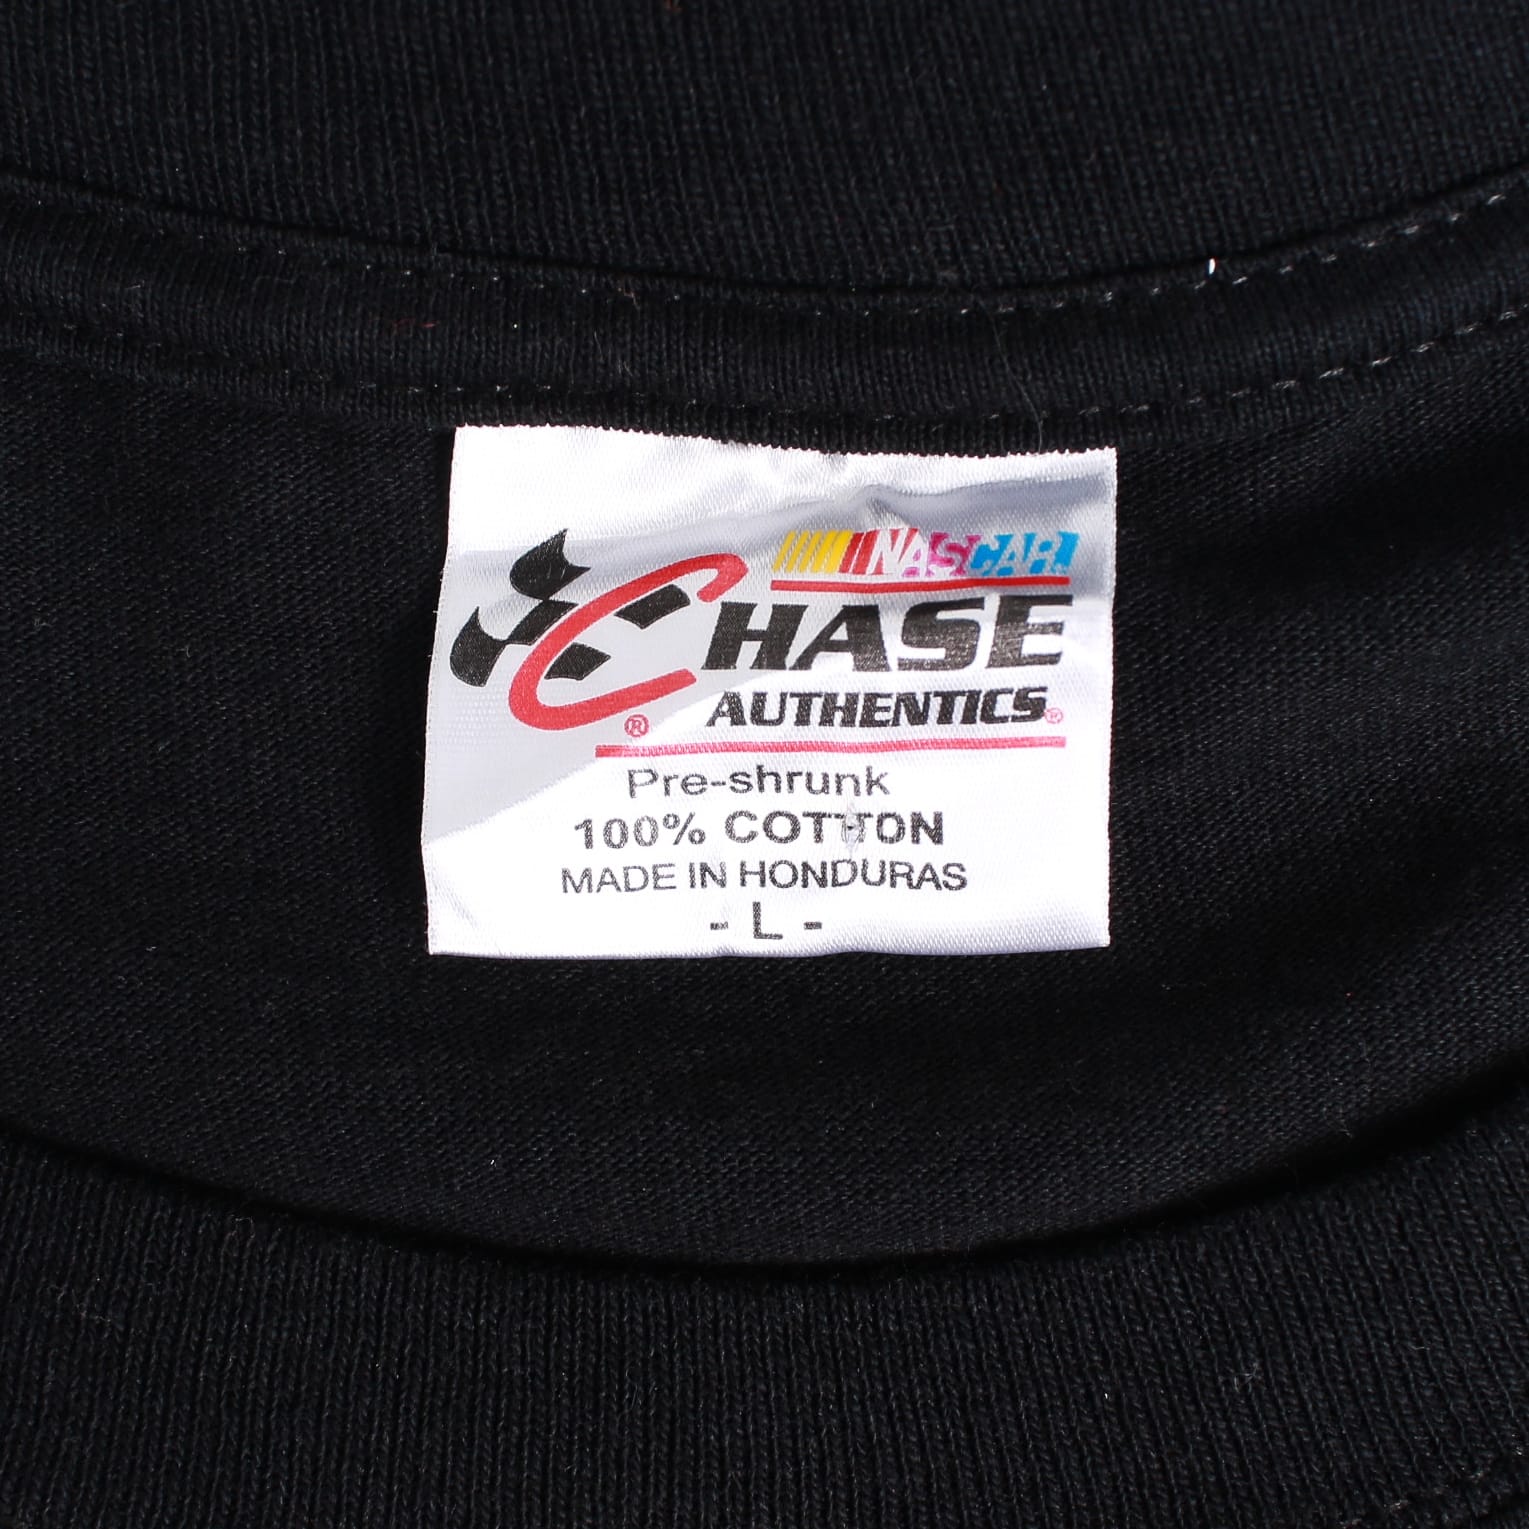 Vintage '14' NASCAR T-Shirt - American Madness